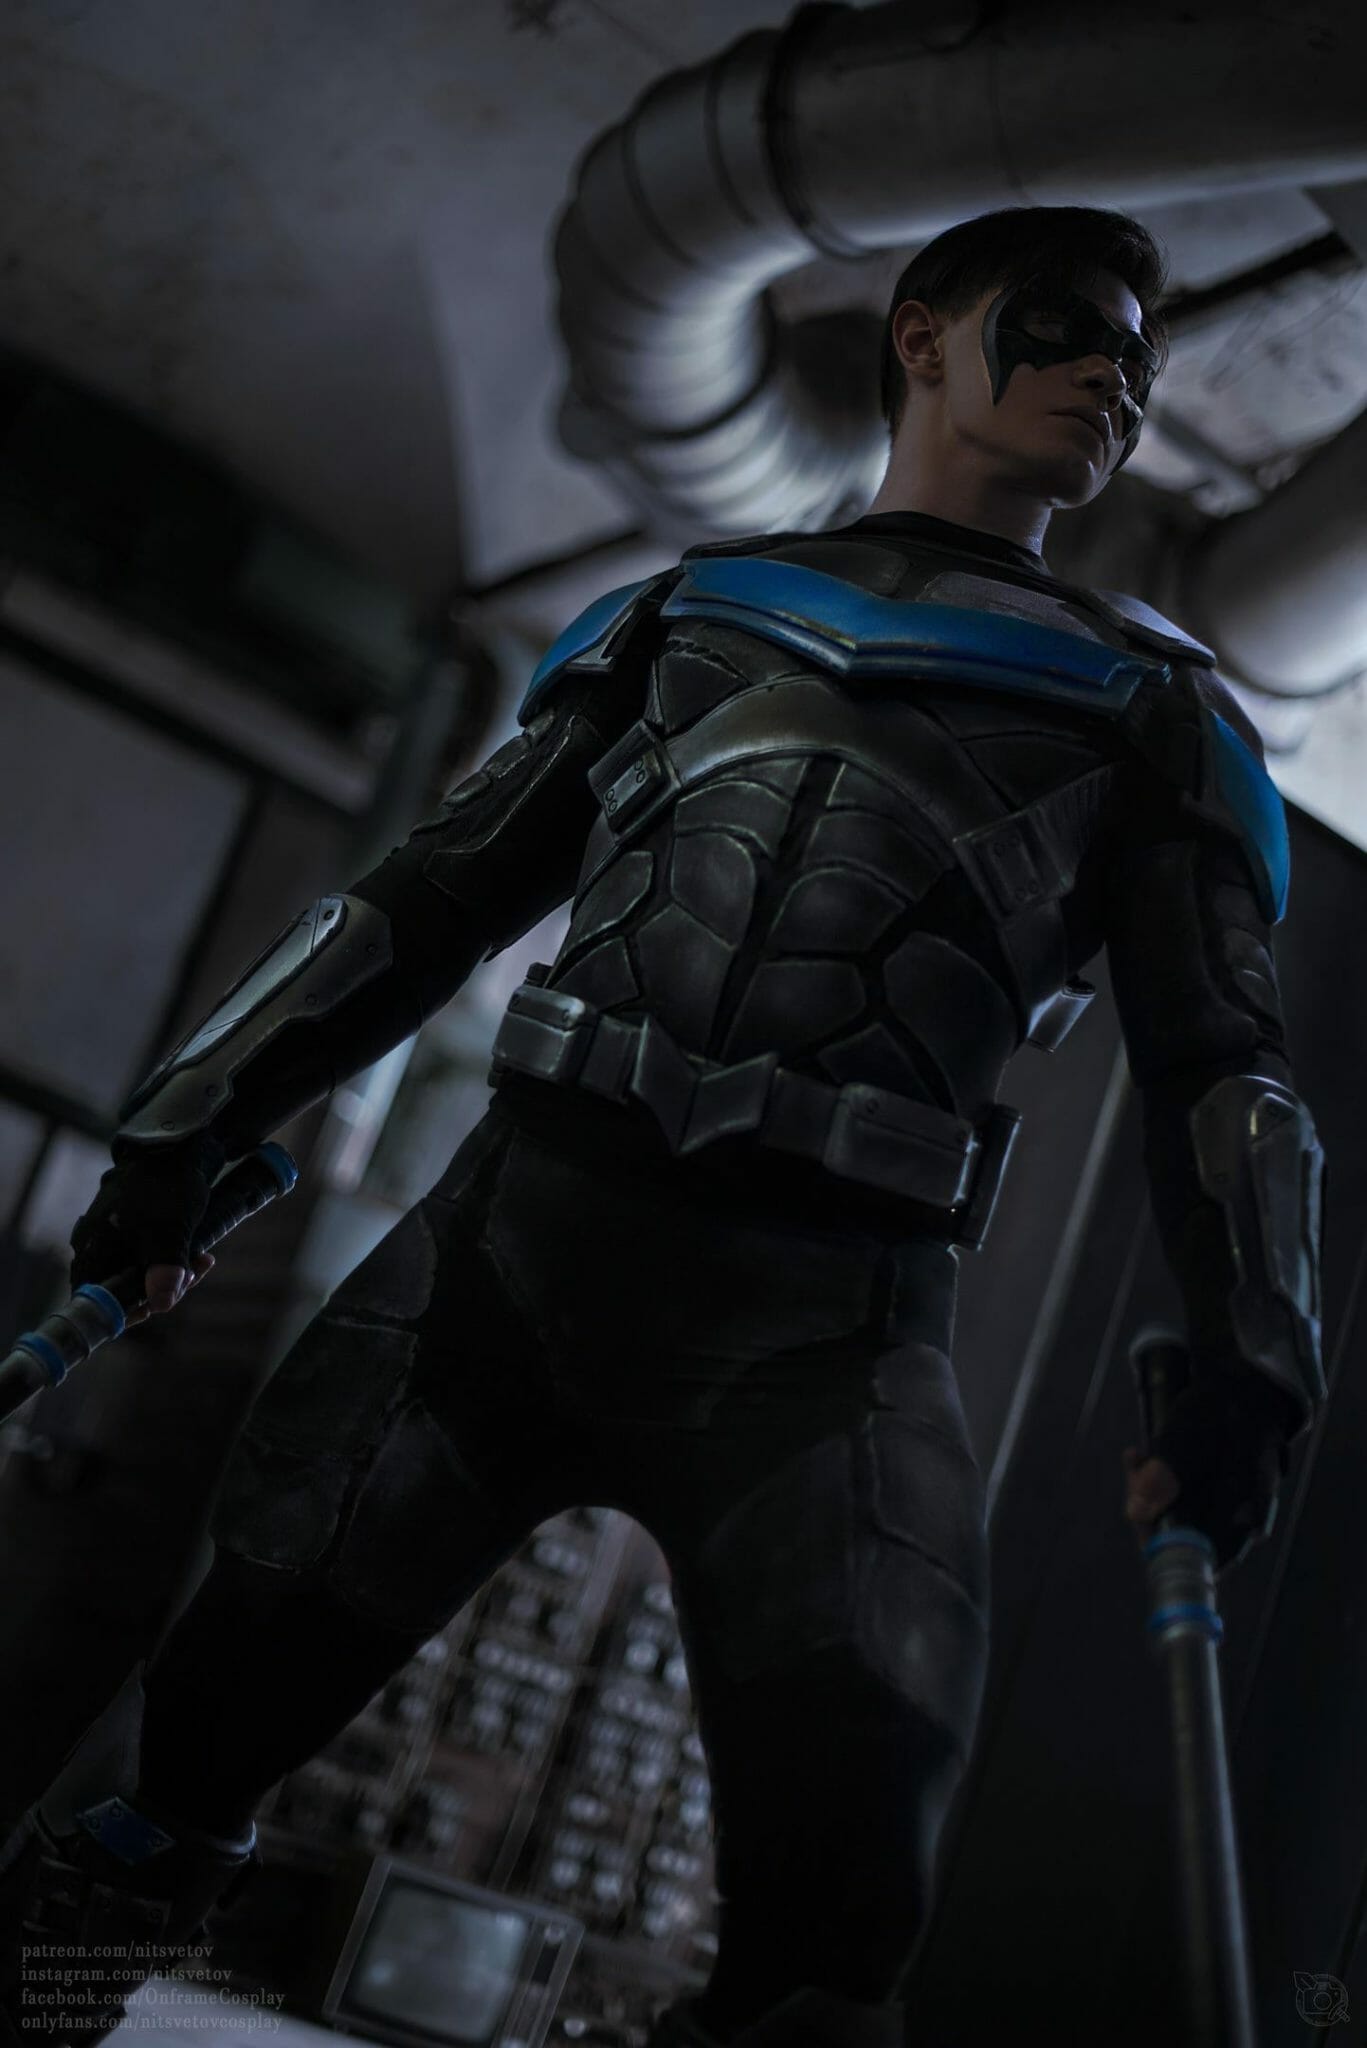 NitsVetov in a stunning Nightwing cosplay